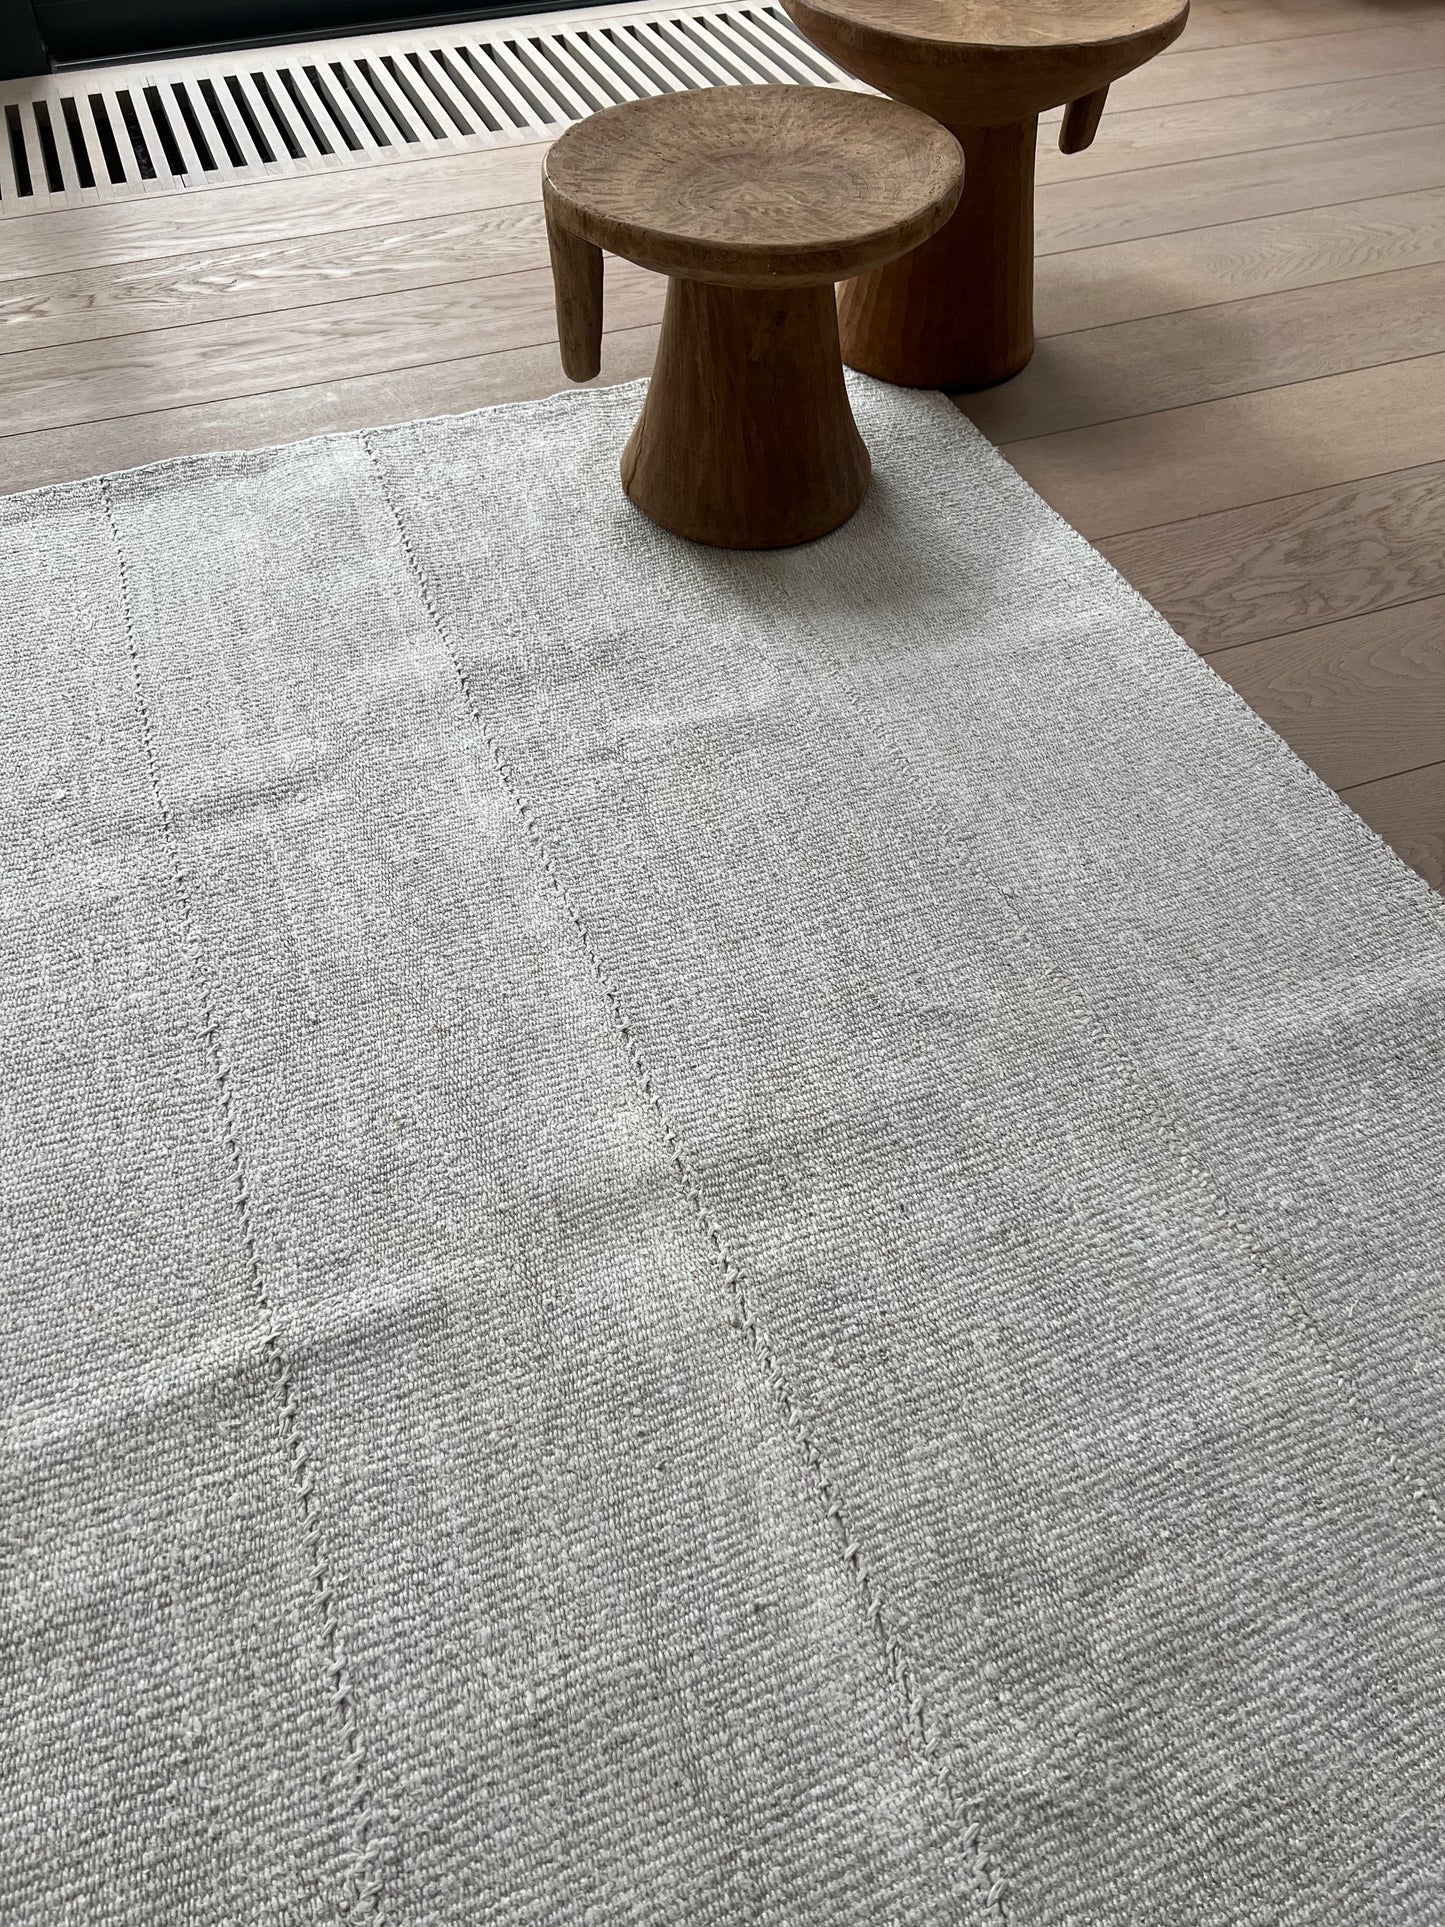 offwhite cotton rug #1